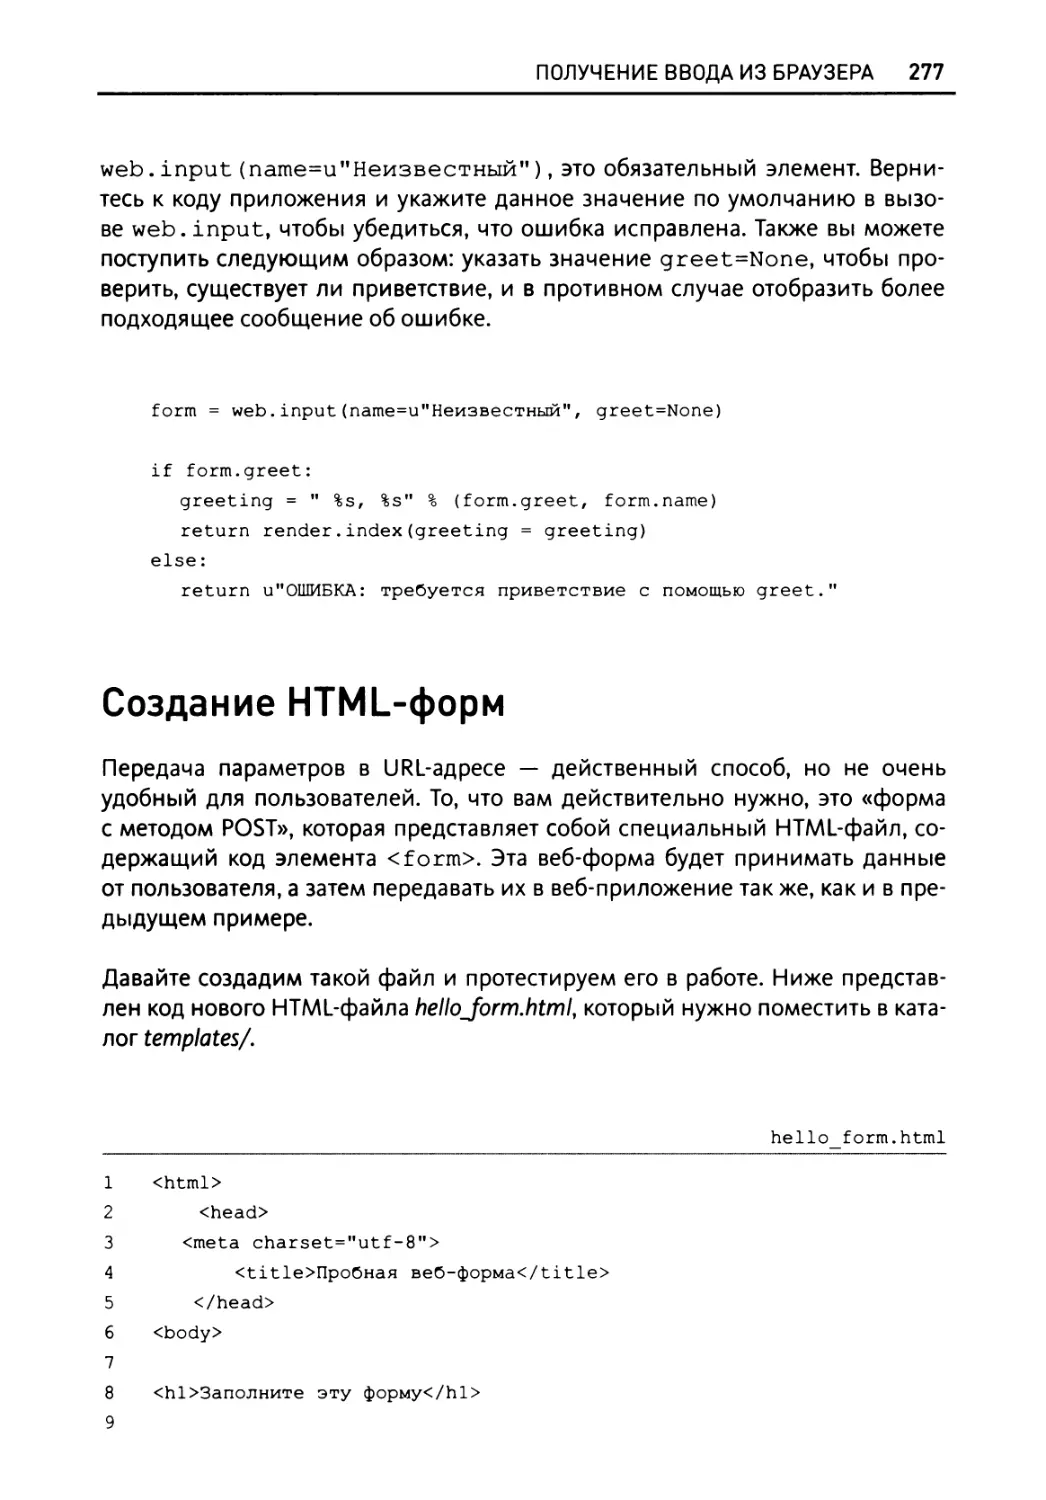 Создание HTML-форм